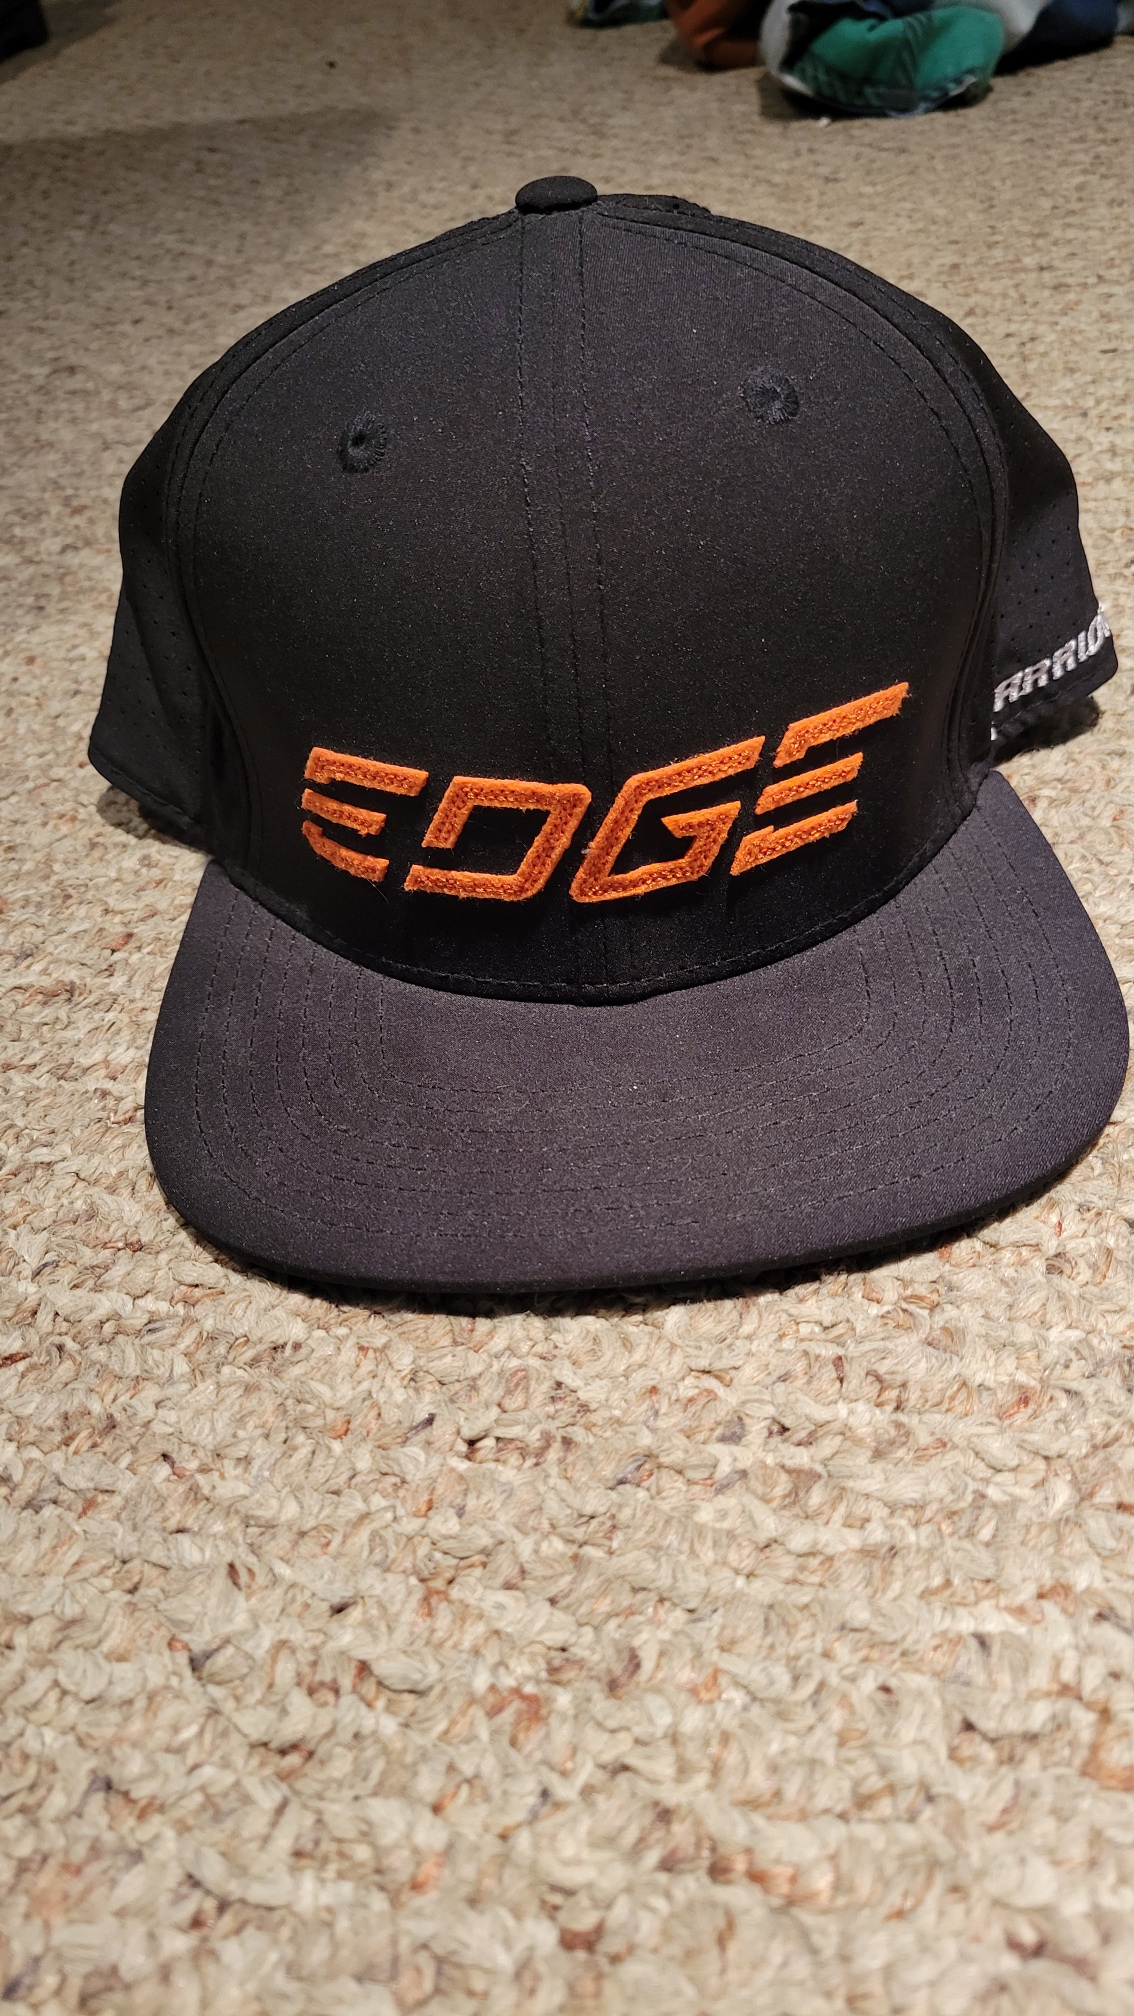 New Men's Warrior Edge Hockey Hat